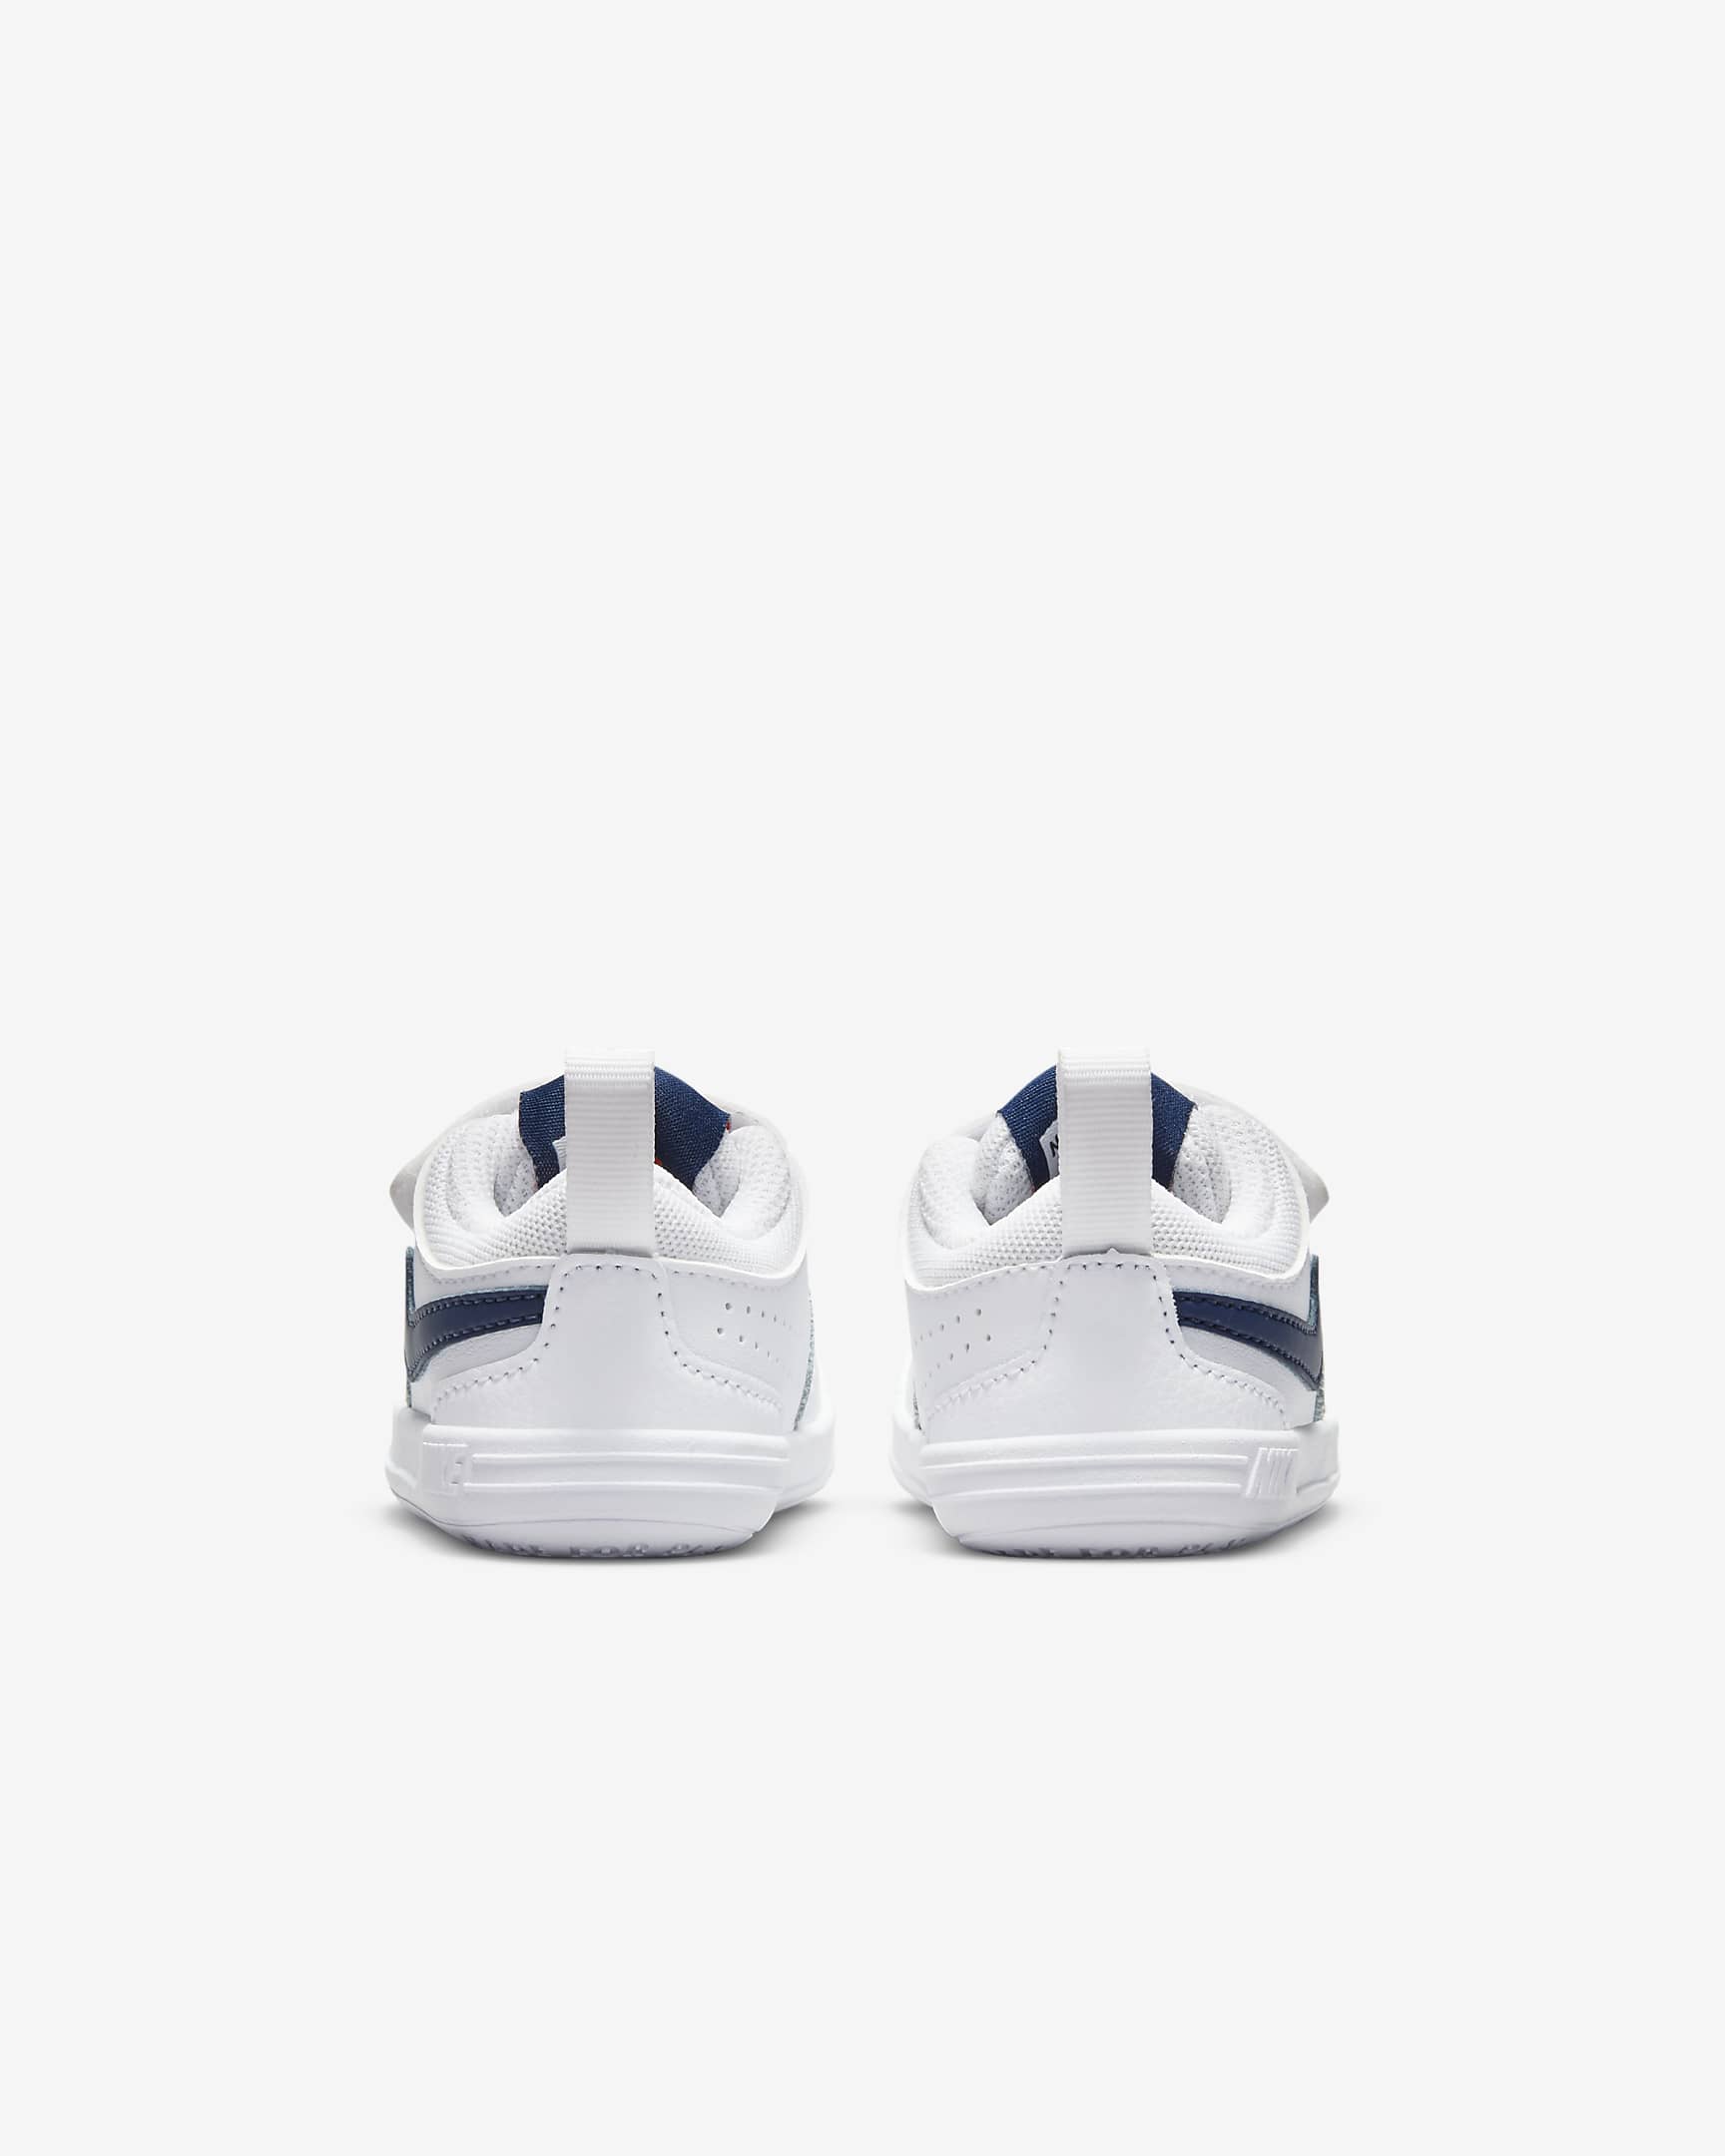 Nike Pico 5 Baby & Toddler Shoes - White/Orange/Gum Light Brown/Midnight Navy